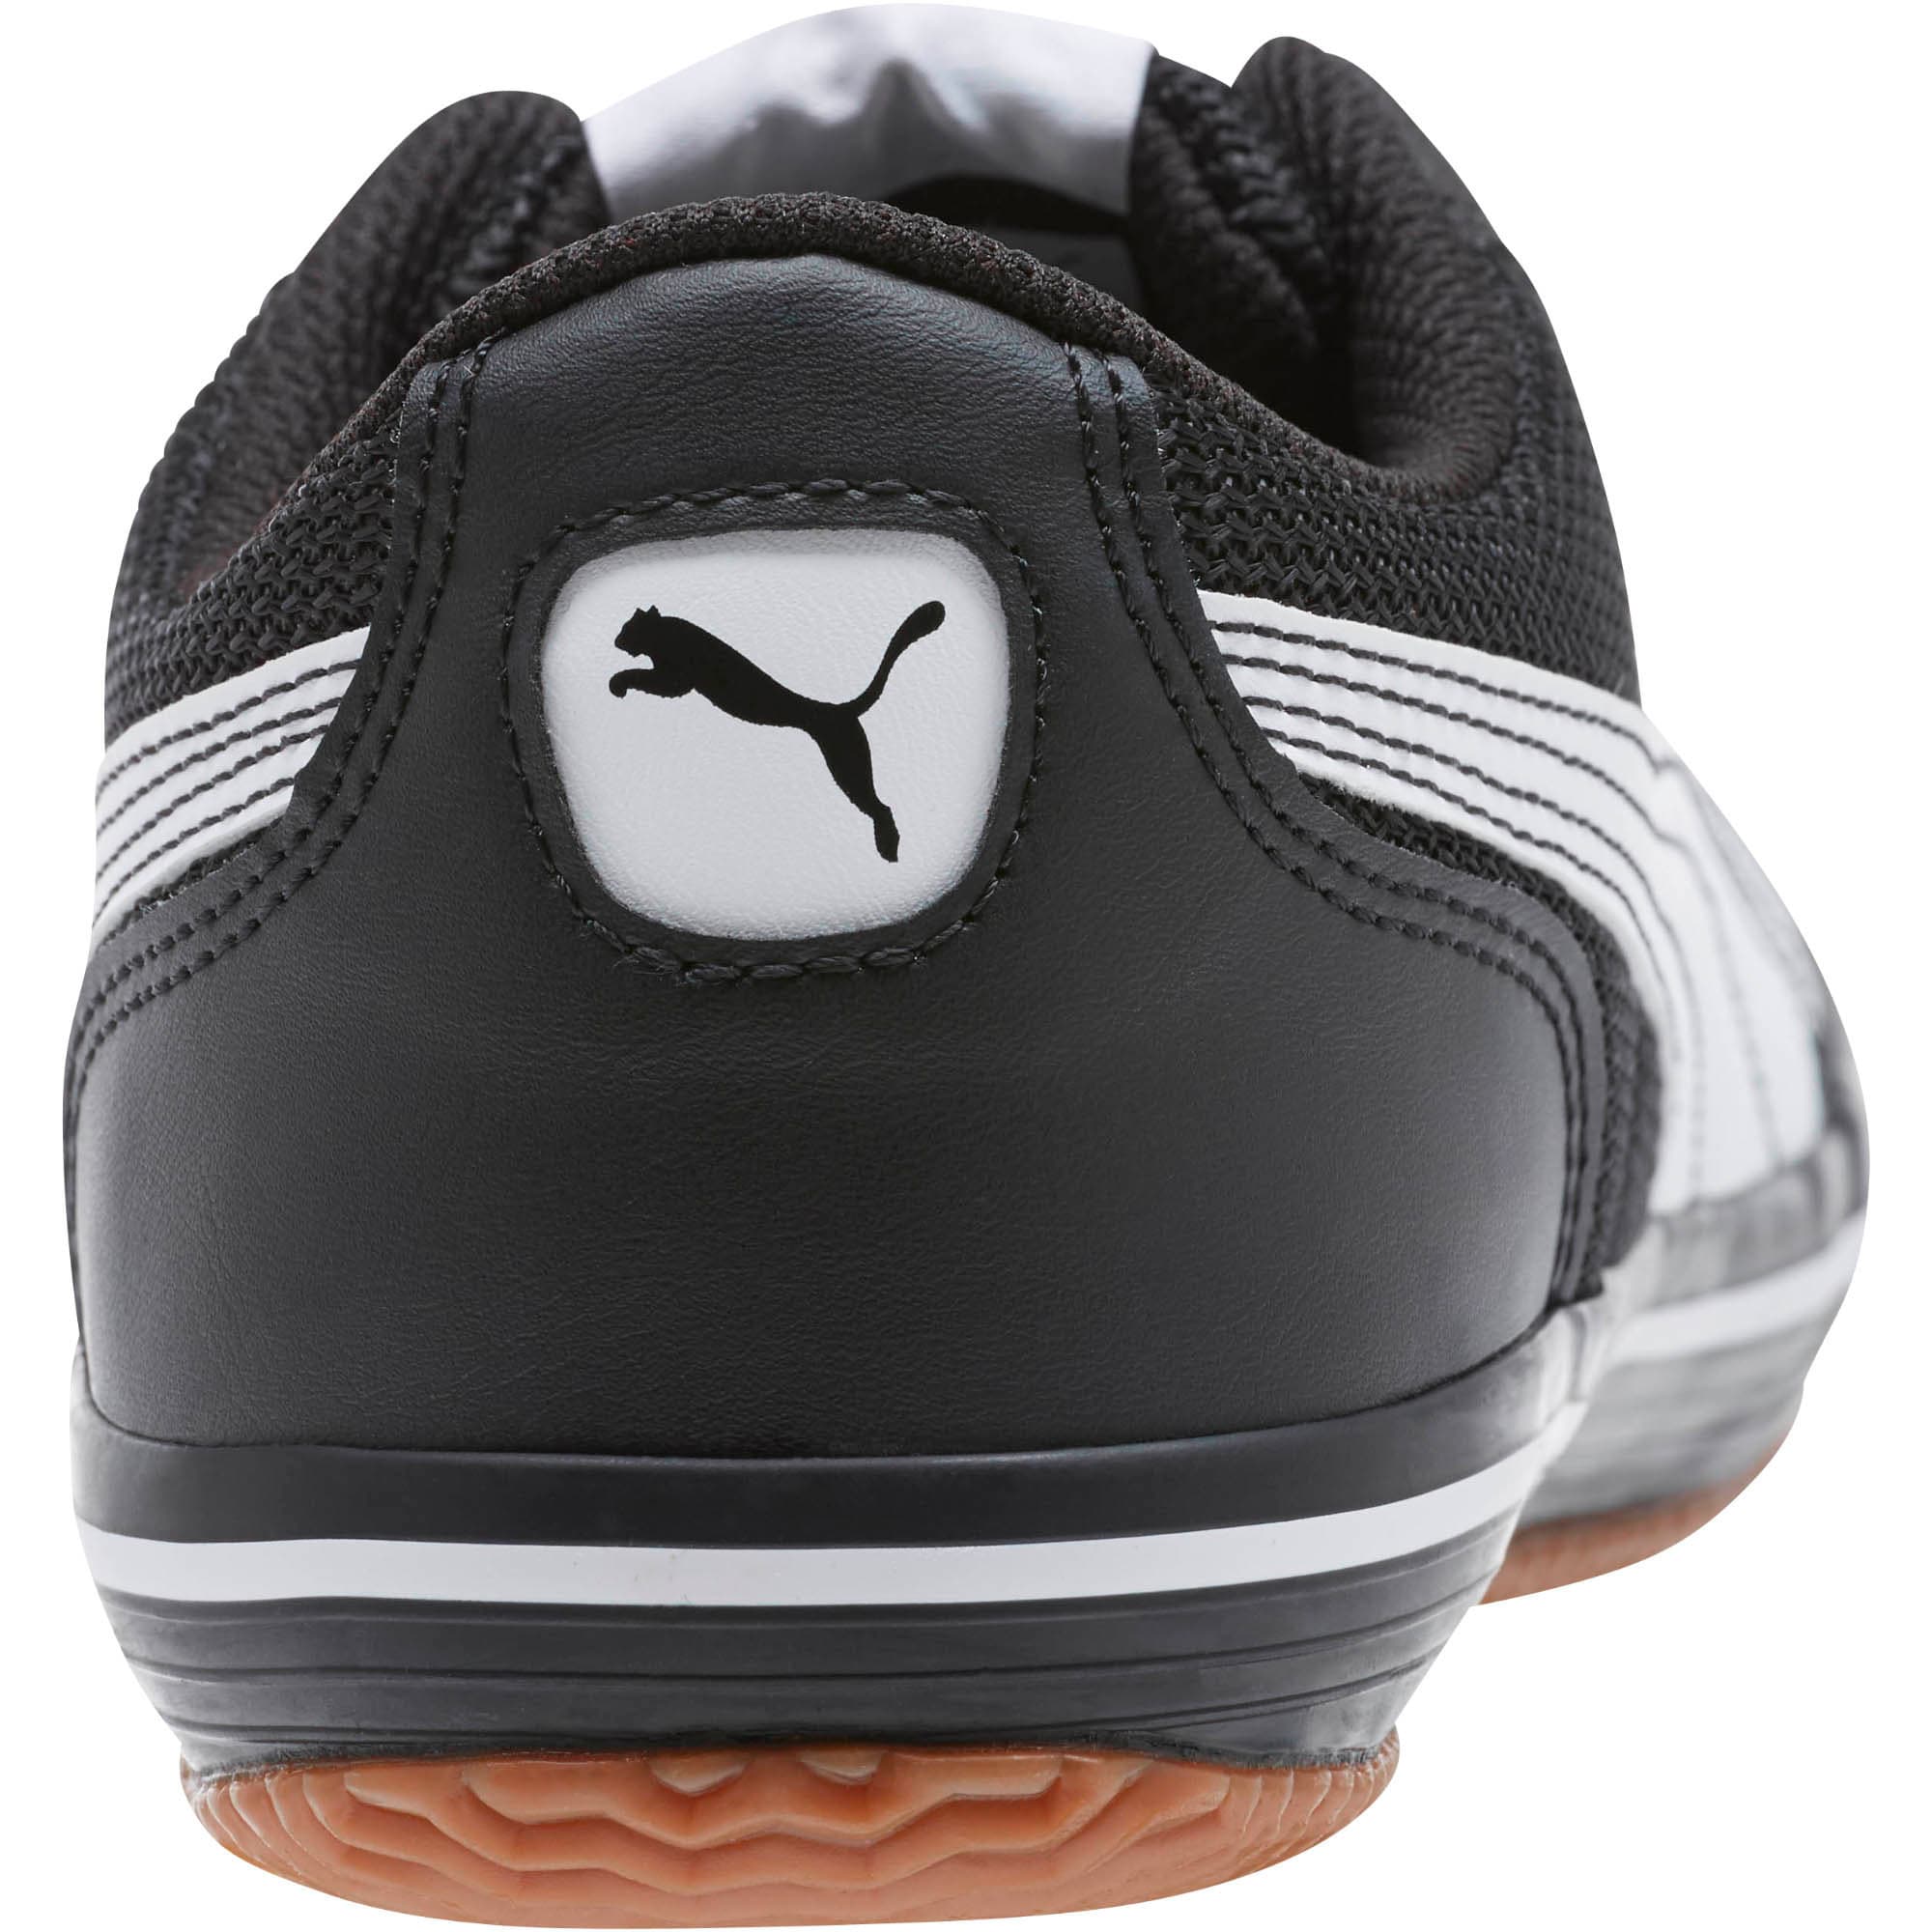 puma men's astro sala soccer shoe